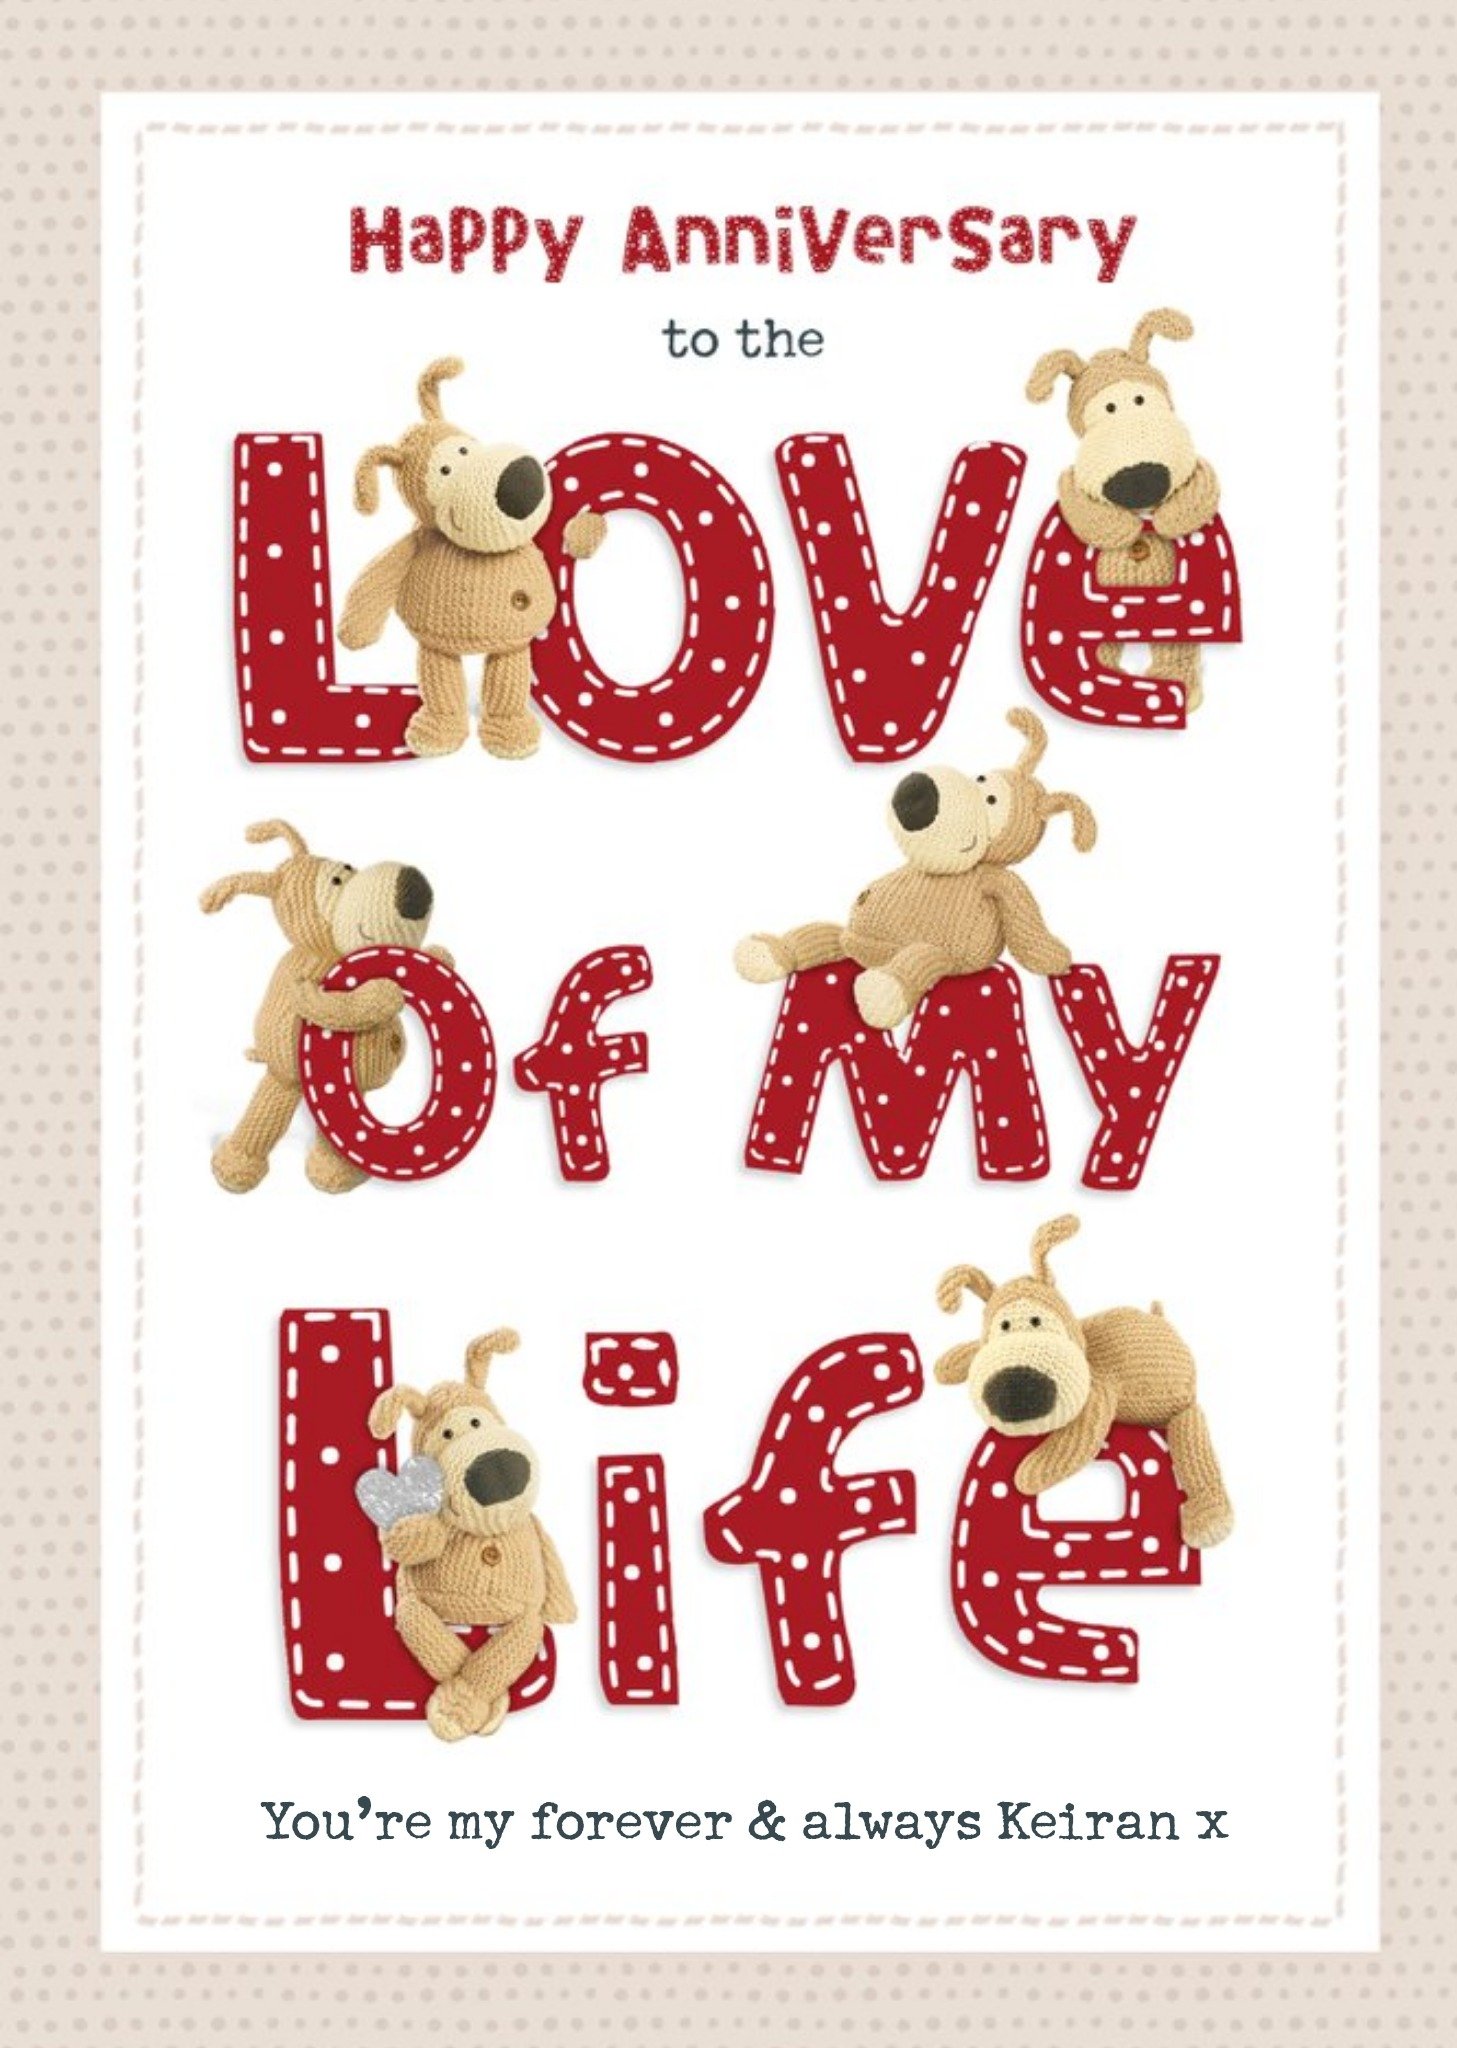 Boofle Love Of My Life Teddy Bears Happy Anniversary Card, Large